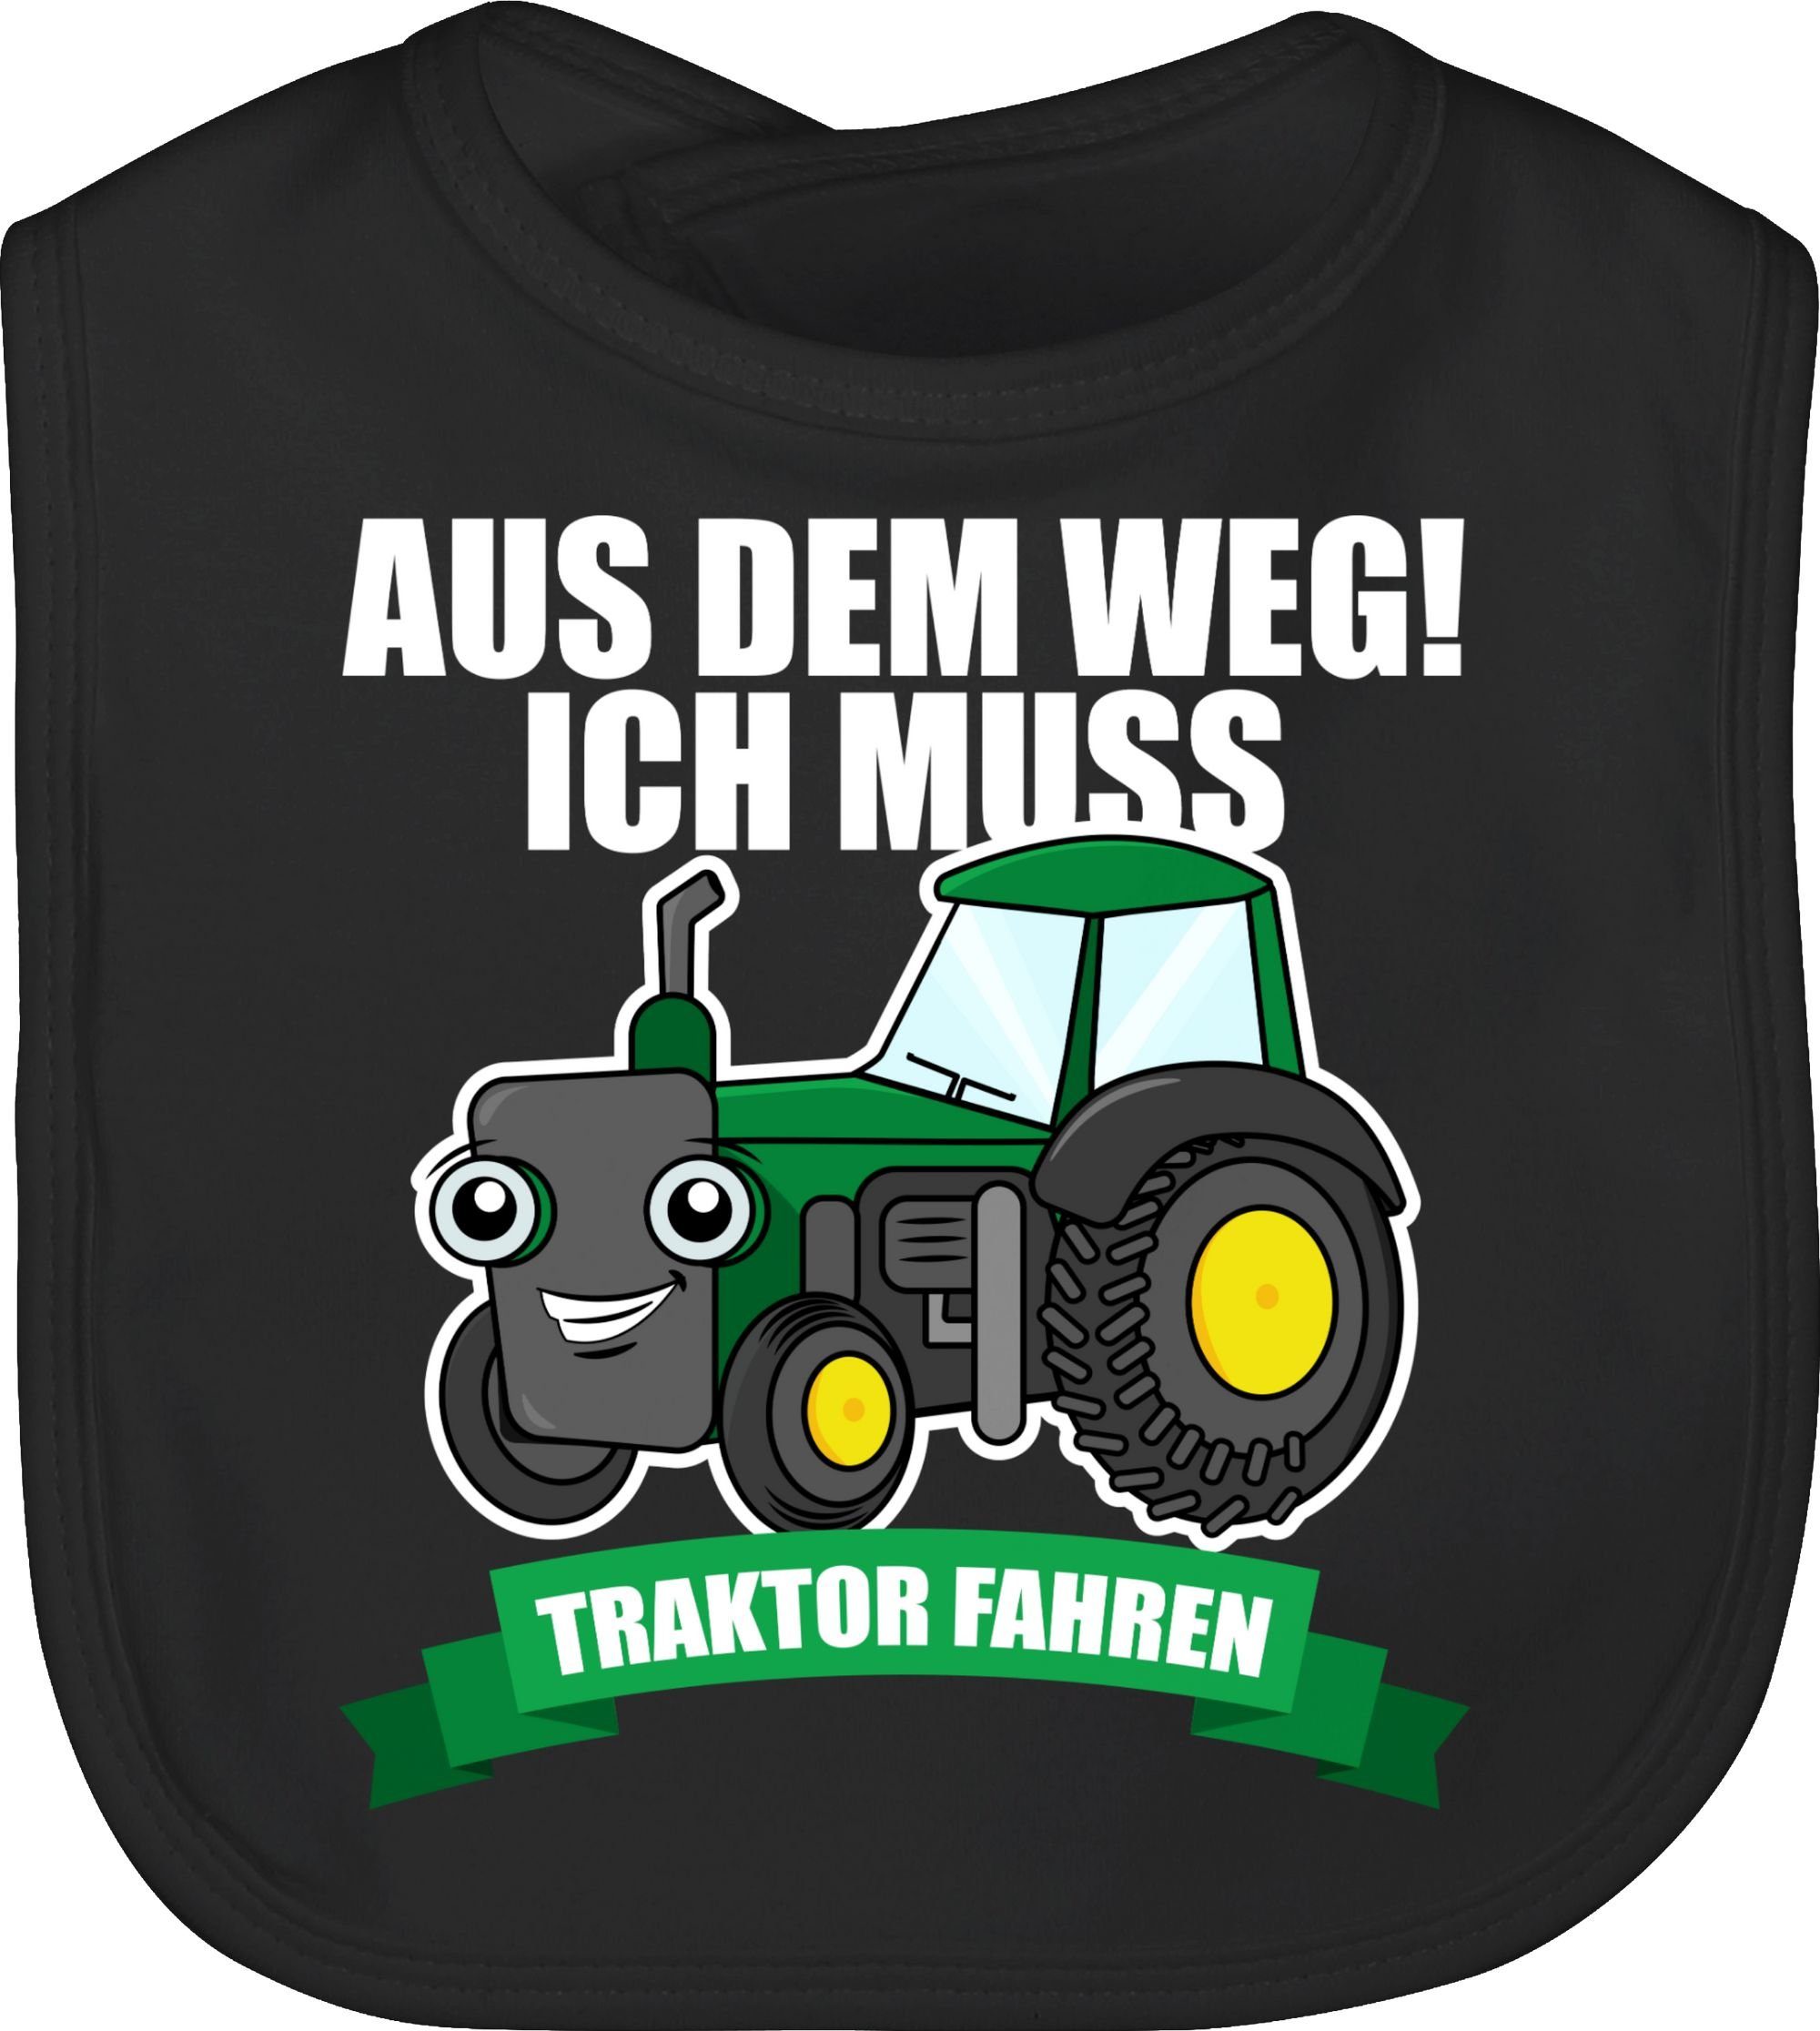 Shirtracer Lätzchen Traktor Aus dem weg grün/weiß, muss ich Schwarz Traktor 2 fahren